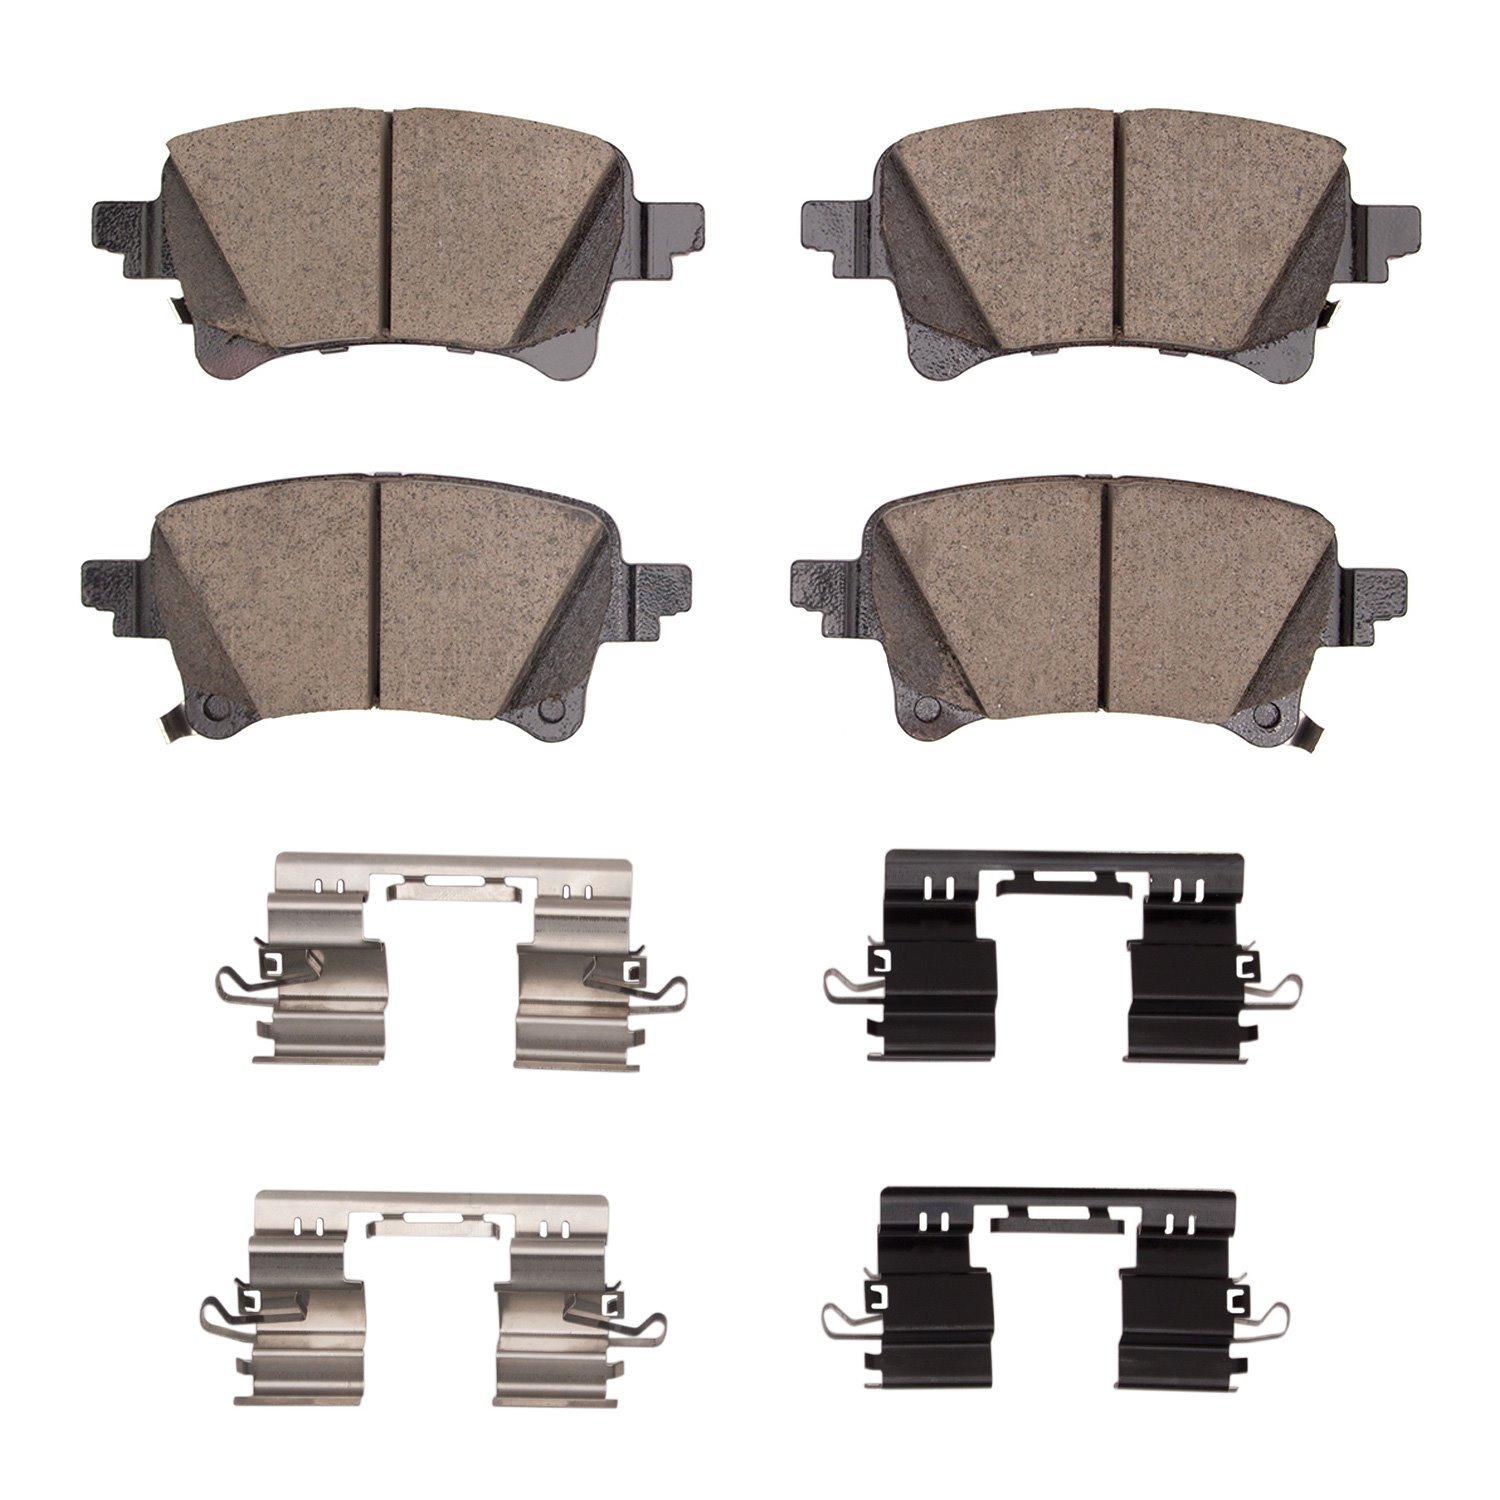 1551-2233-01 5000 Advanced Ceramic Brake Pads & Hardware Kit, Fits Select Mopar, Position: Rear